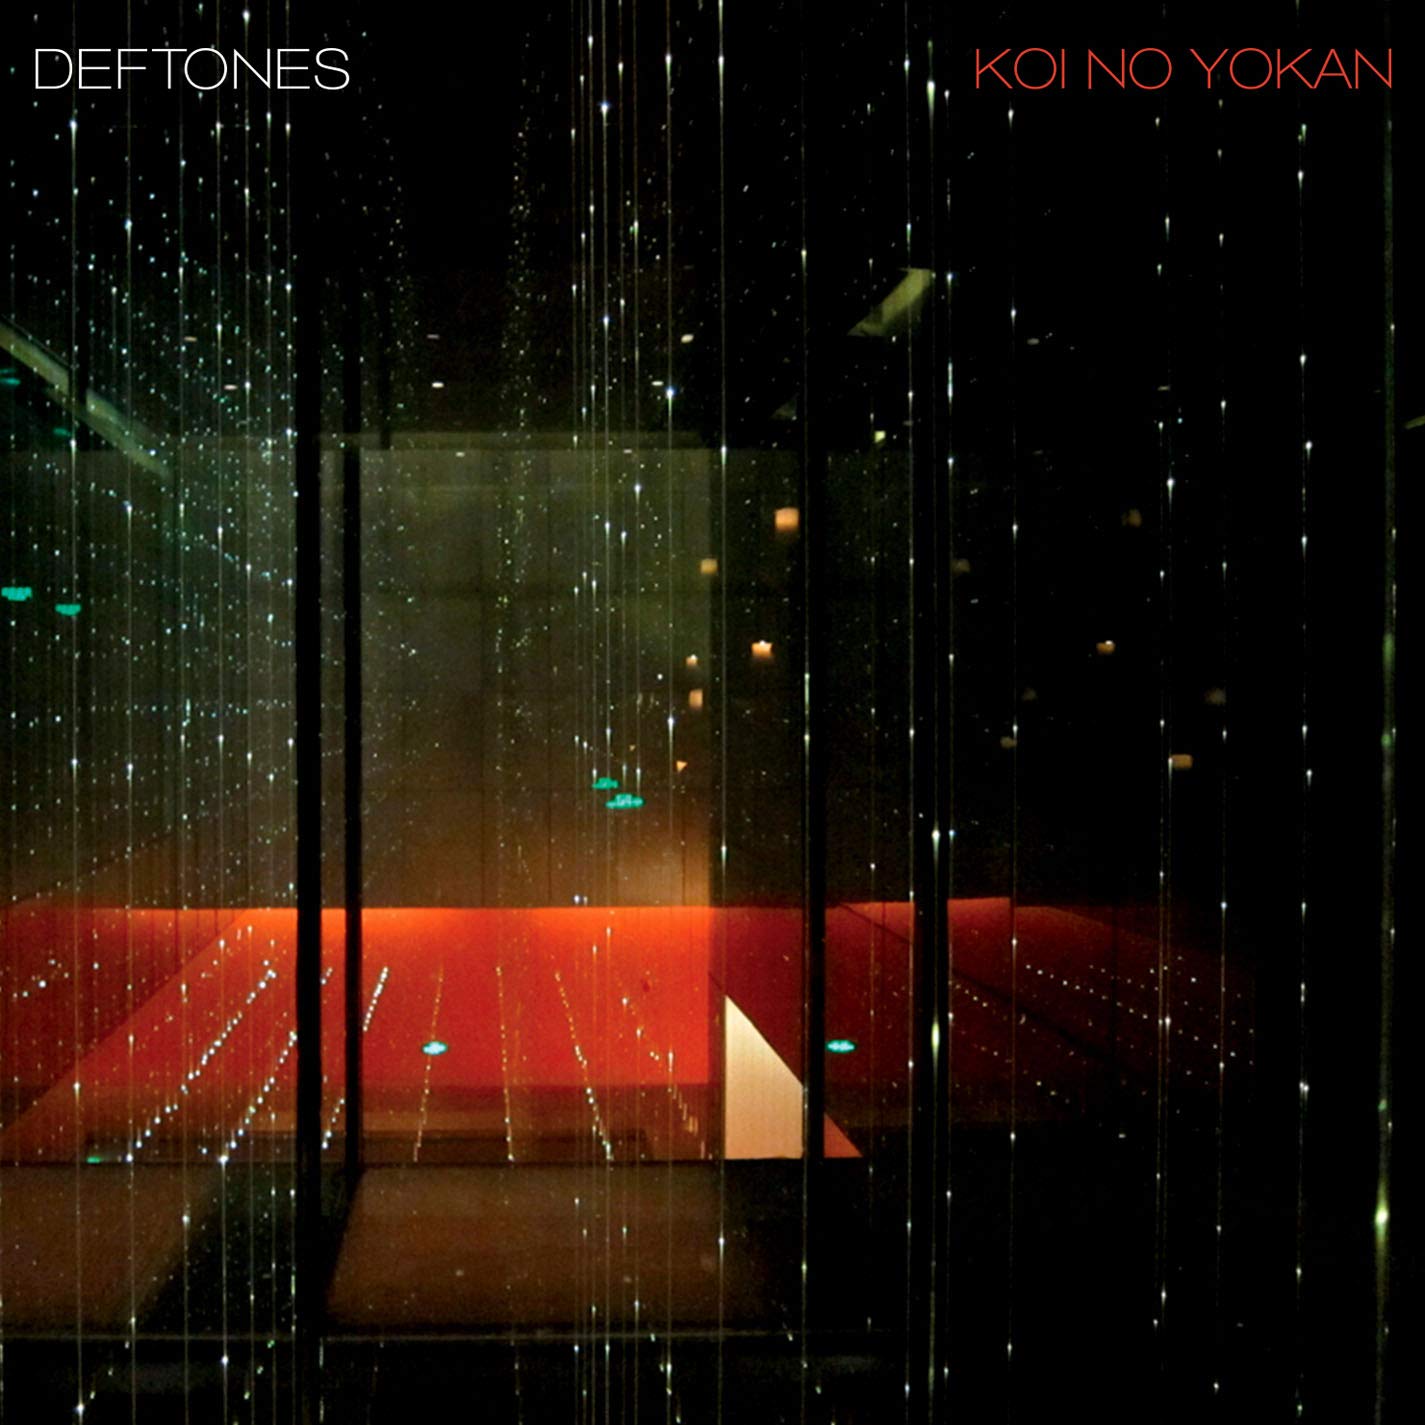 DEFTONES - KOI NO YOKAN Vinyl LP